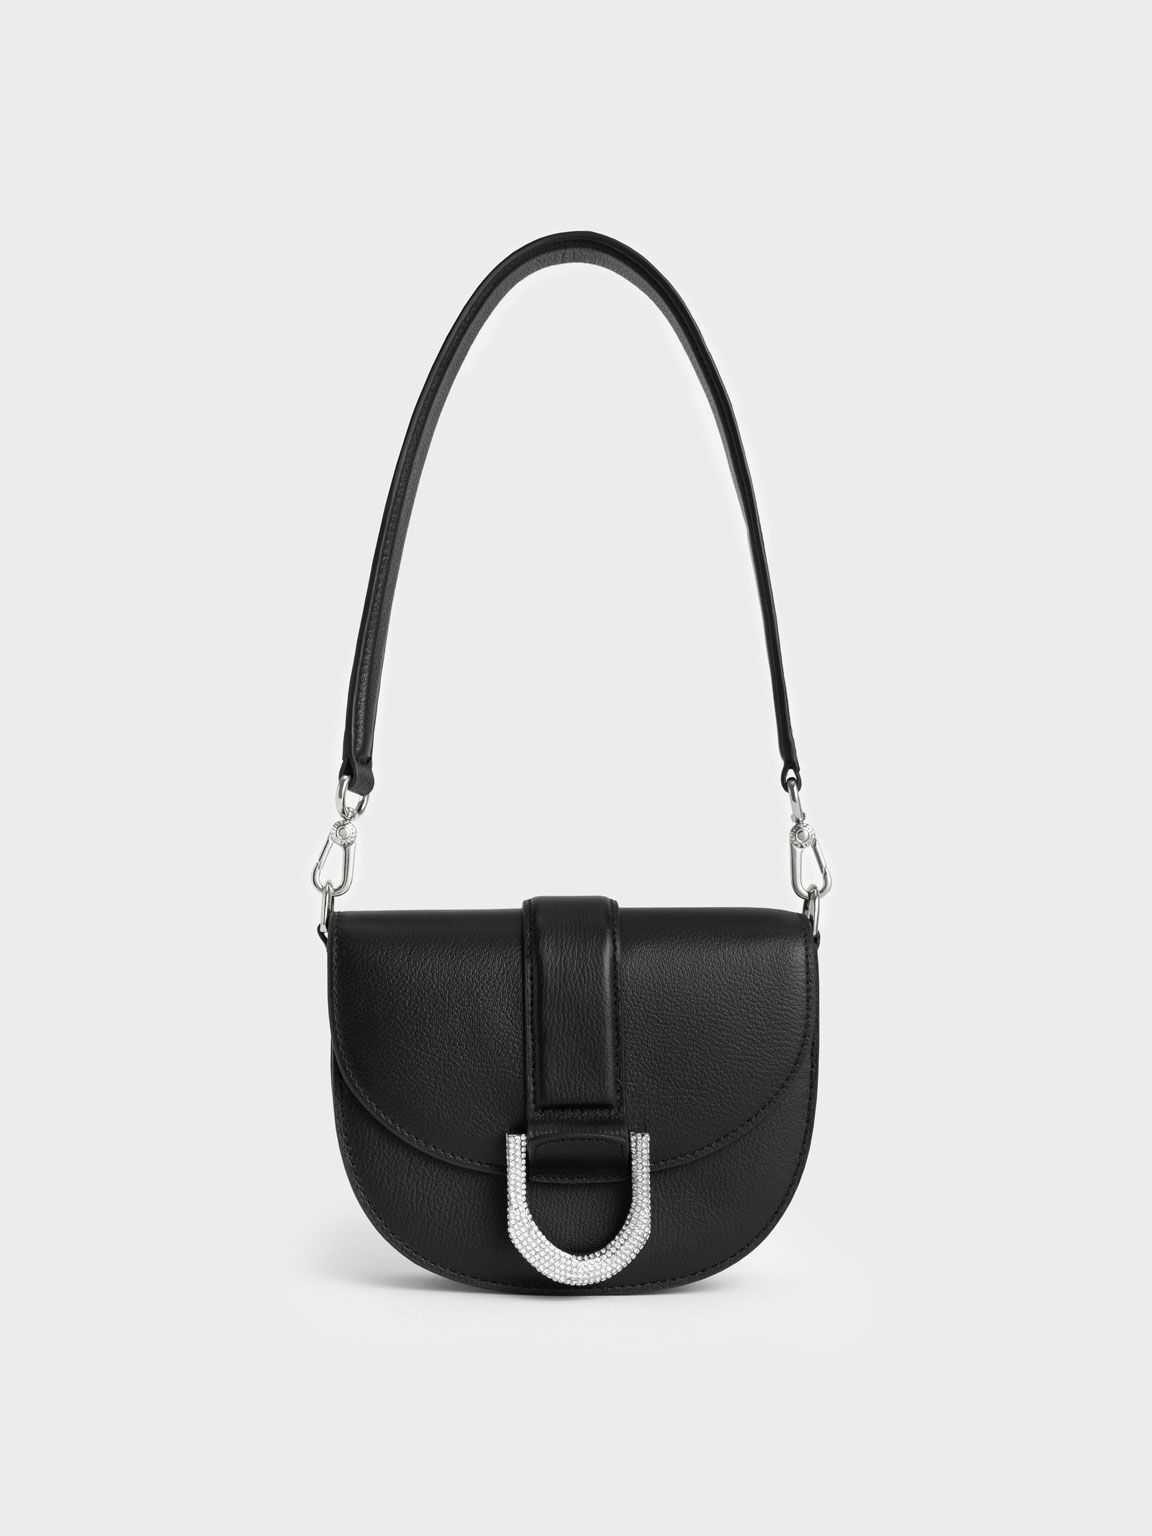 The D - White Leather Handbag